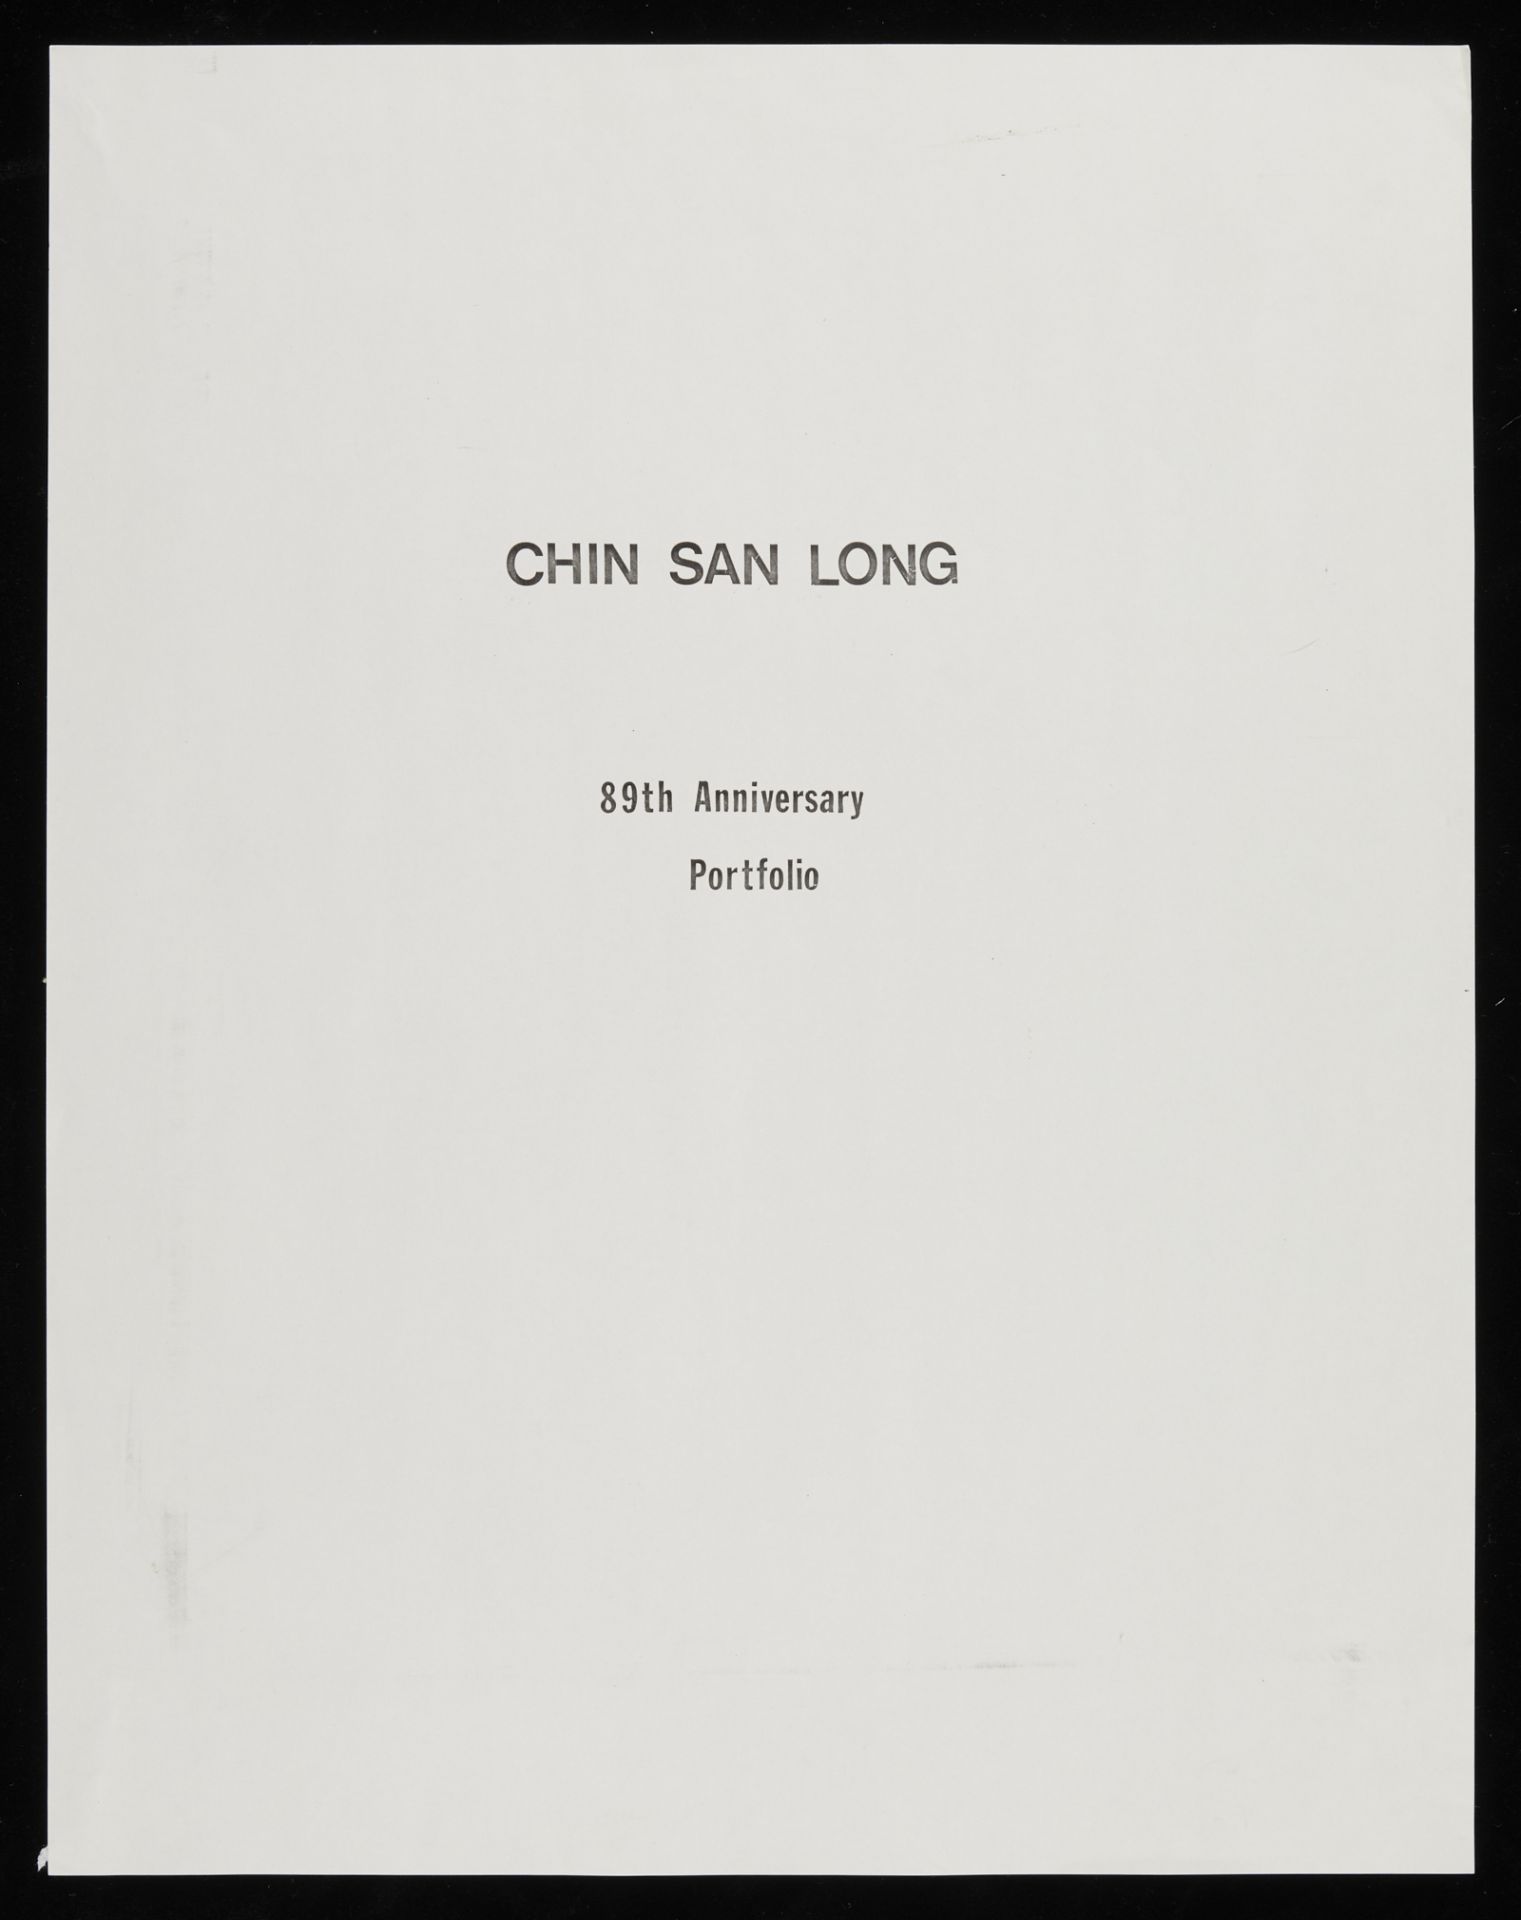 Chin San Long Portfolio Ephemera & Photo - Image 8 of 12